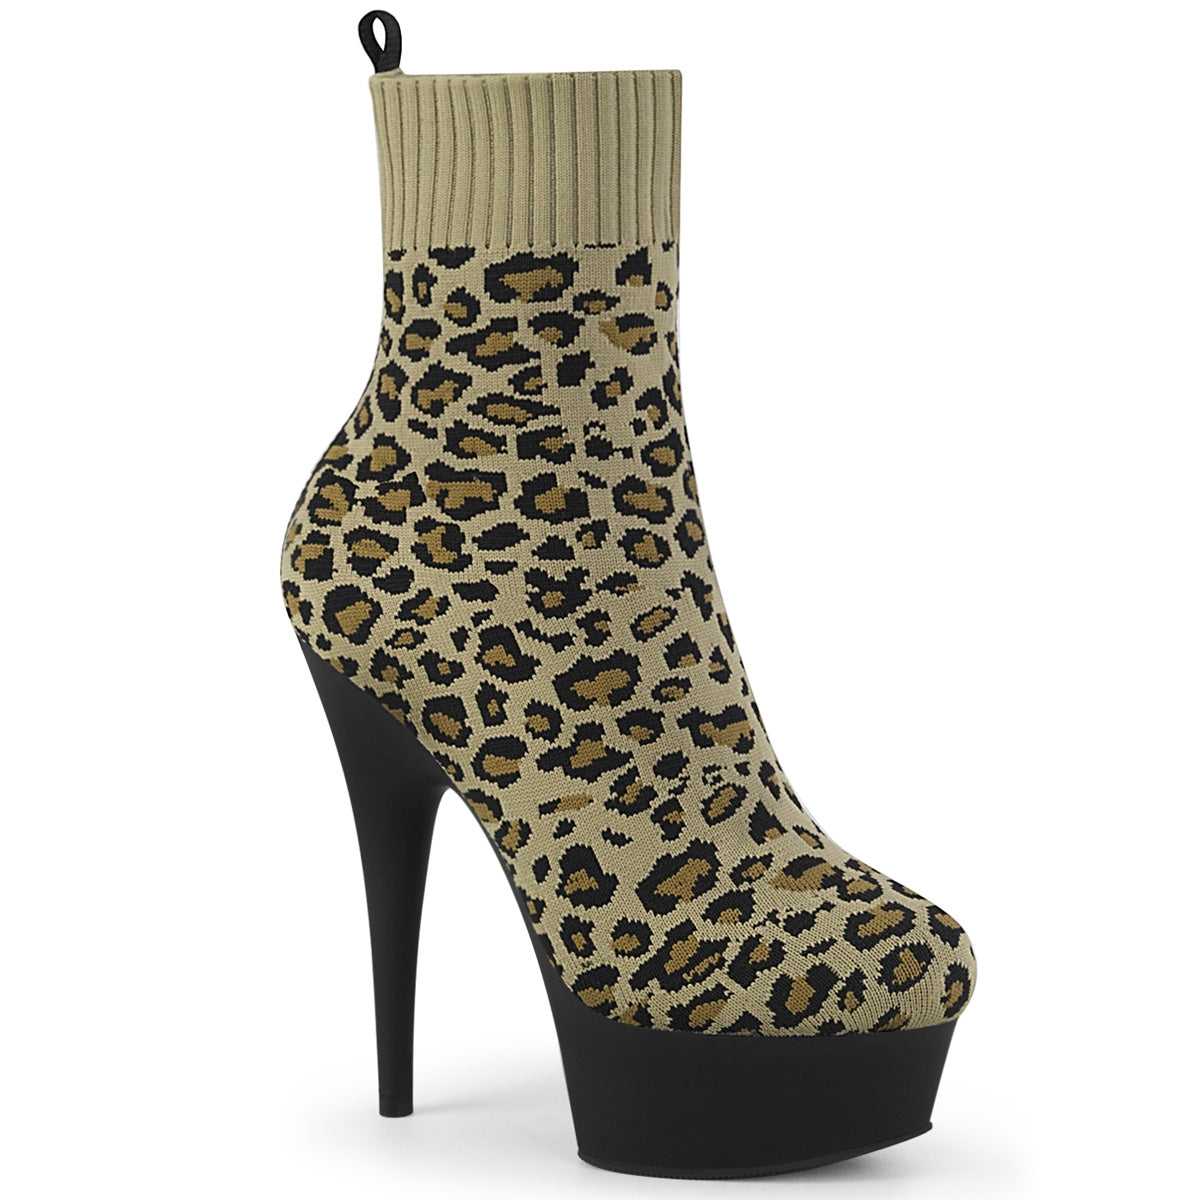 Delight-1002LP 6 "Heel Tan Leopard Pole Pole Bailarín zapatos